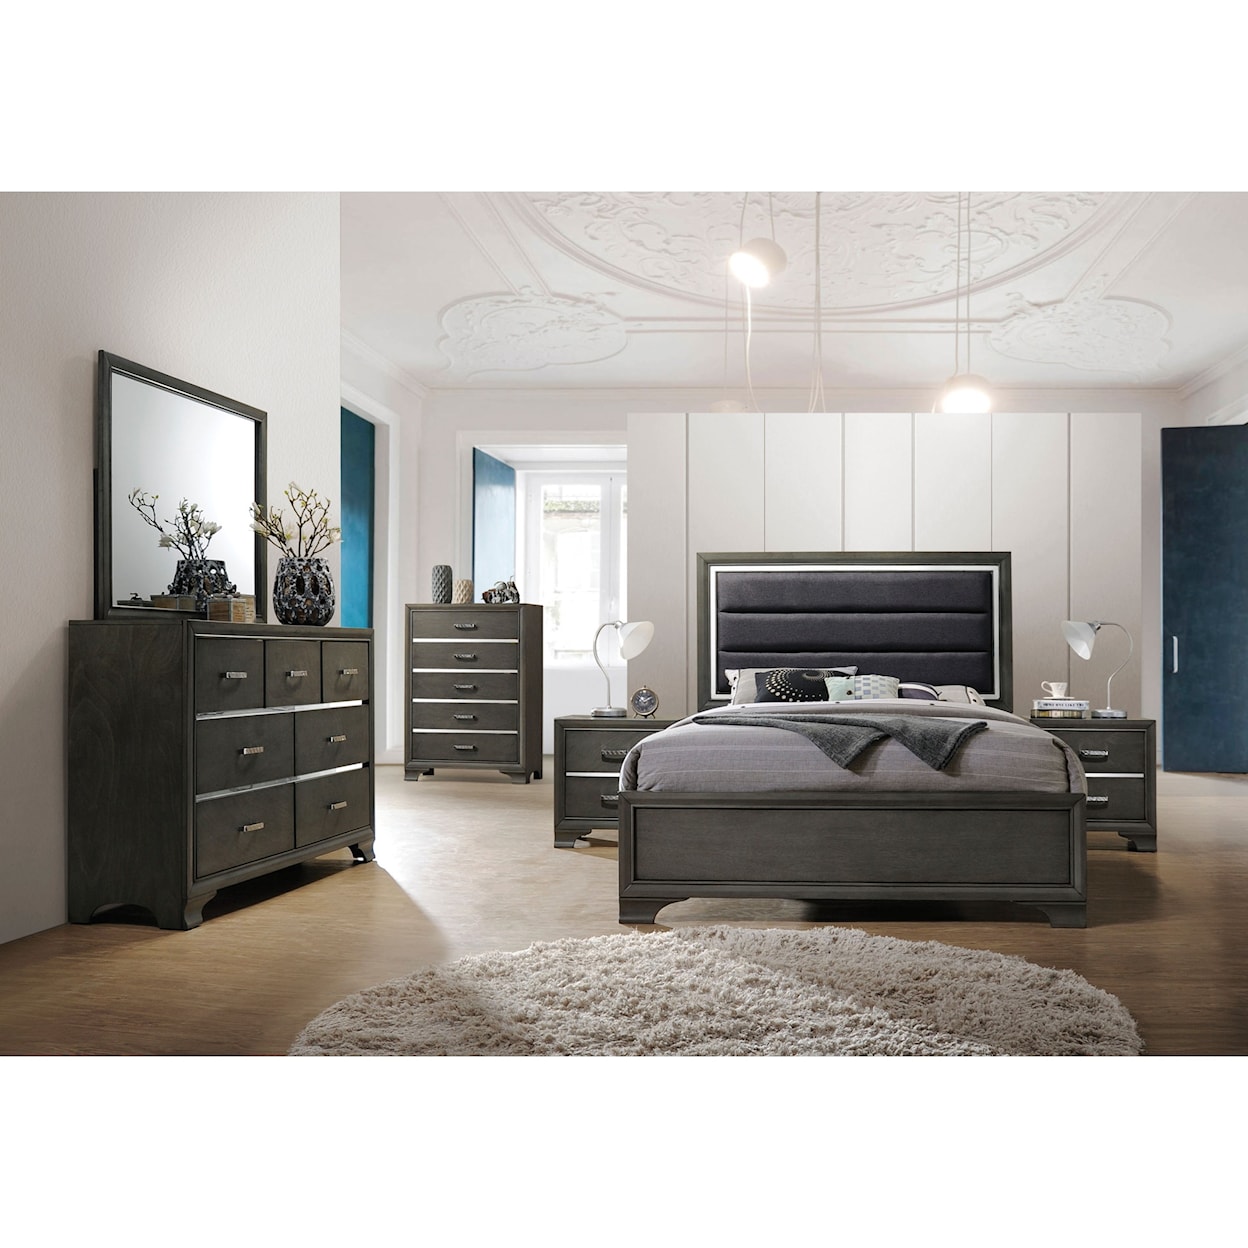 Acme Furniture Carine II 7pc Queen Bedroom Group